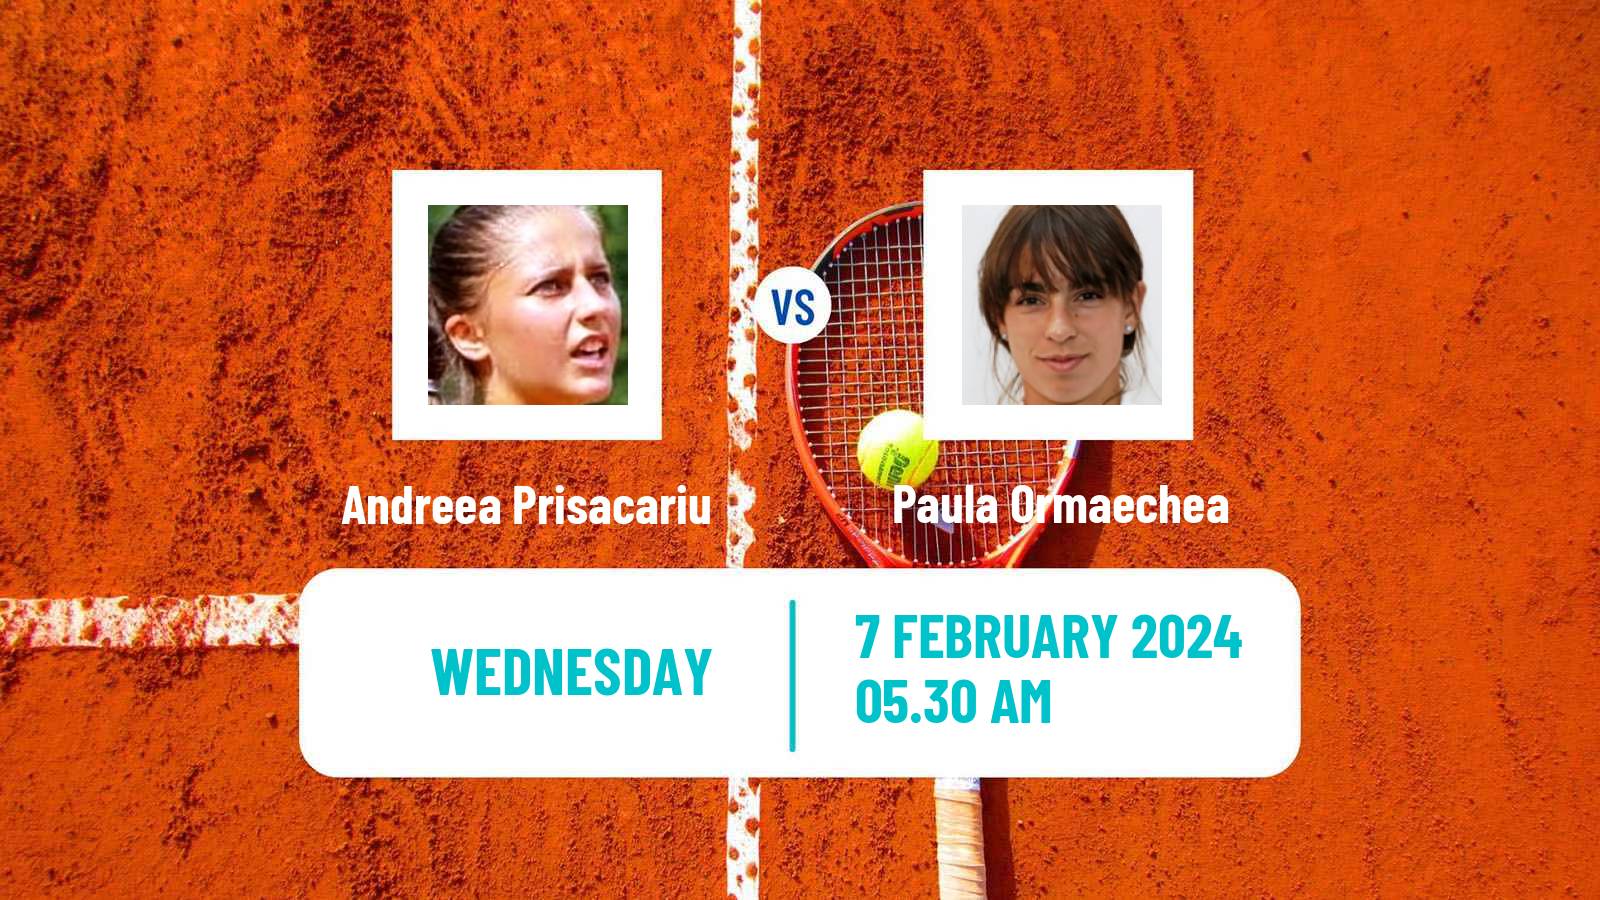 Tennis ITF W35 Antalya 2 Women Andreea Prisacariu - Paula Ormaechea